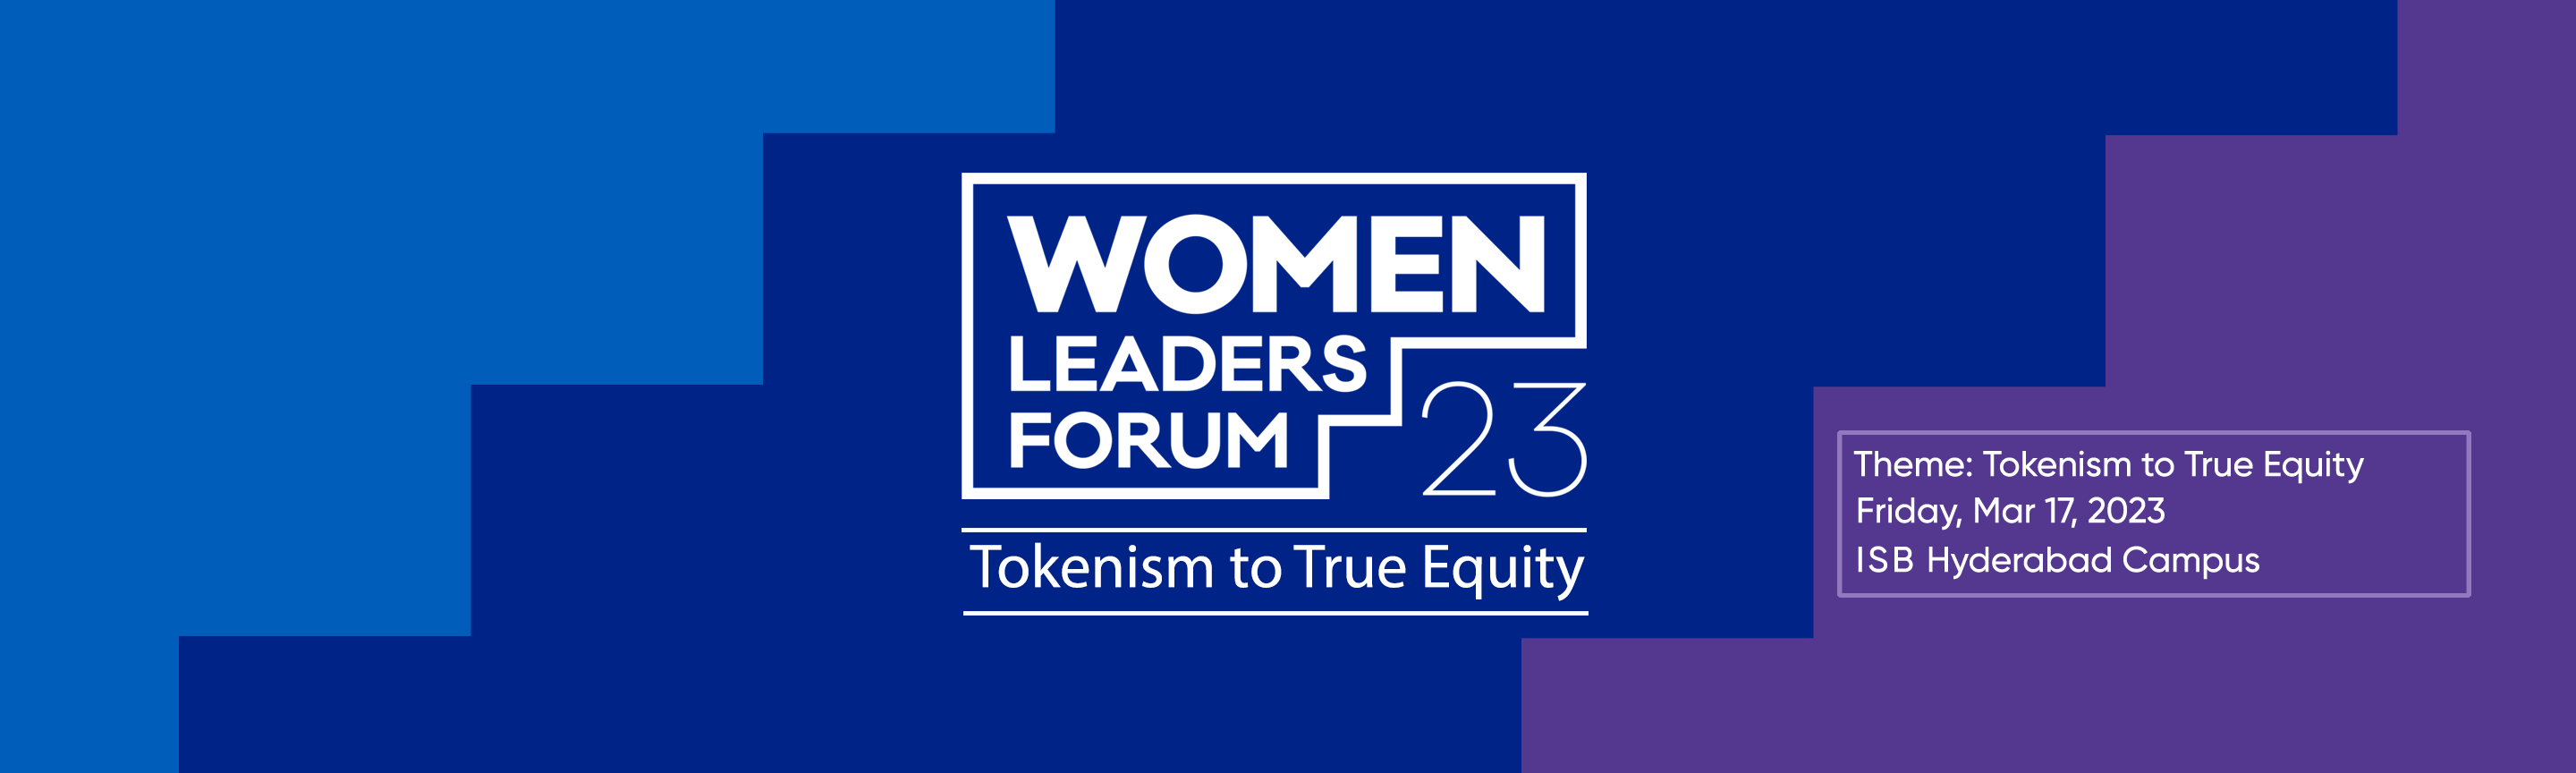 Women Leaders Forum